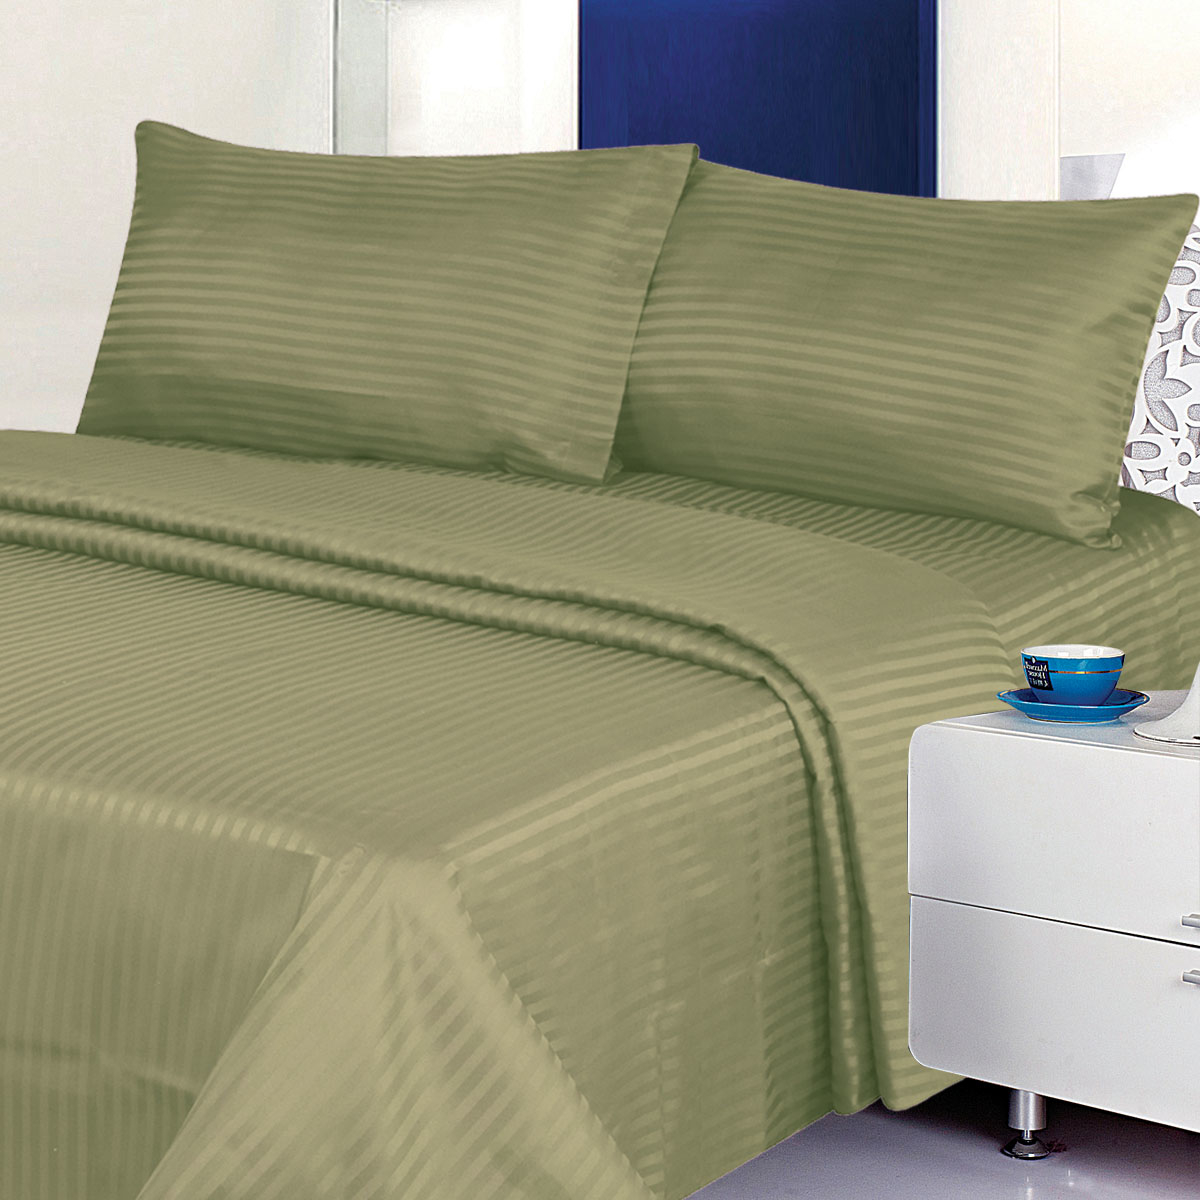 Deluxe 6PC Classic Cotton-Blend Sateen Dobby Stripe Bed Sheet Set - Full, Black